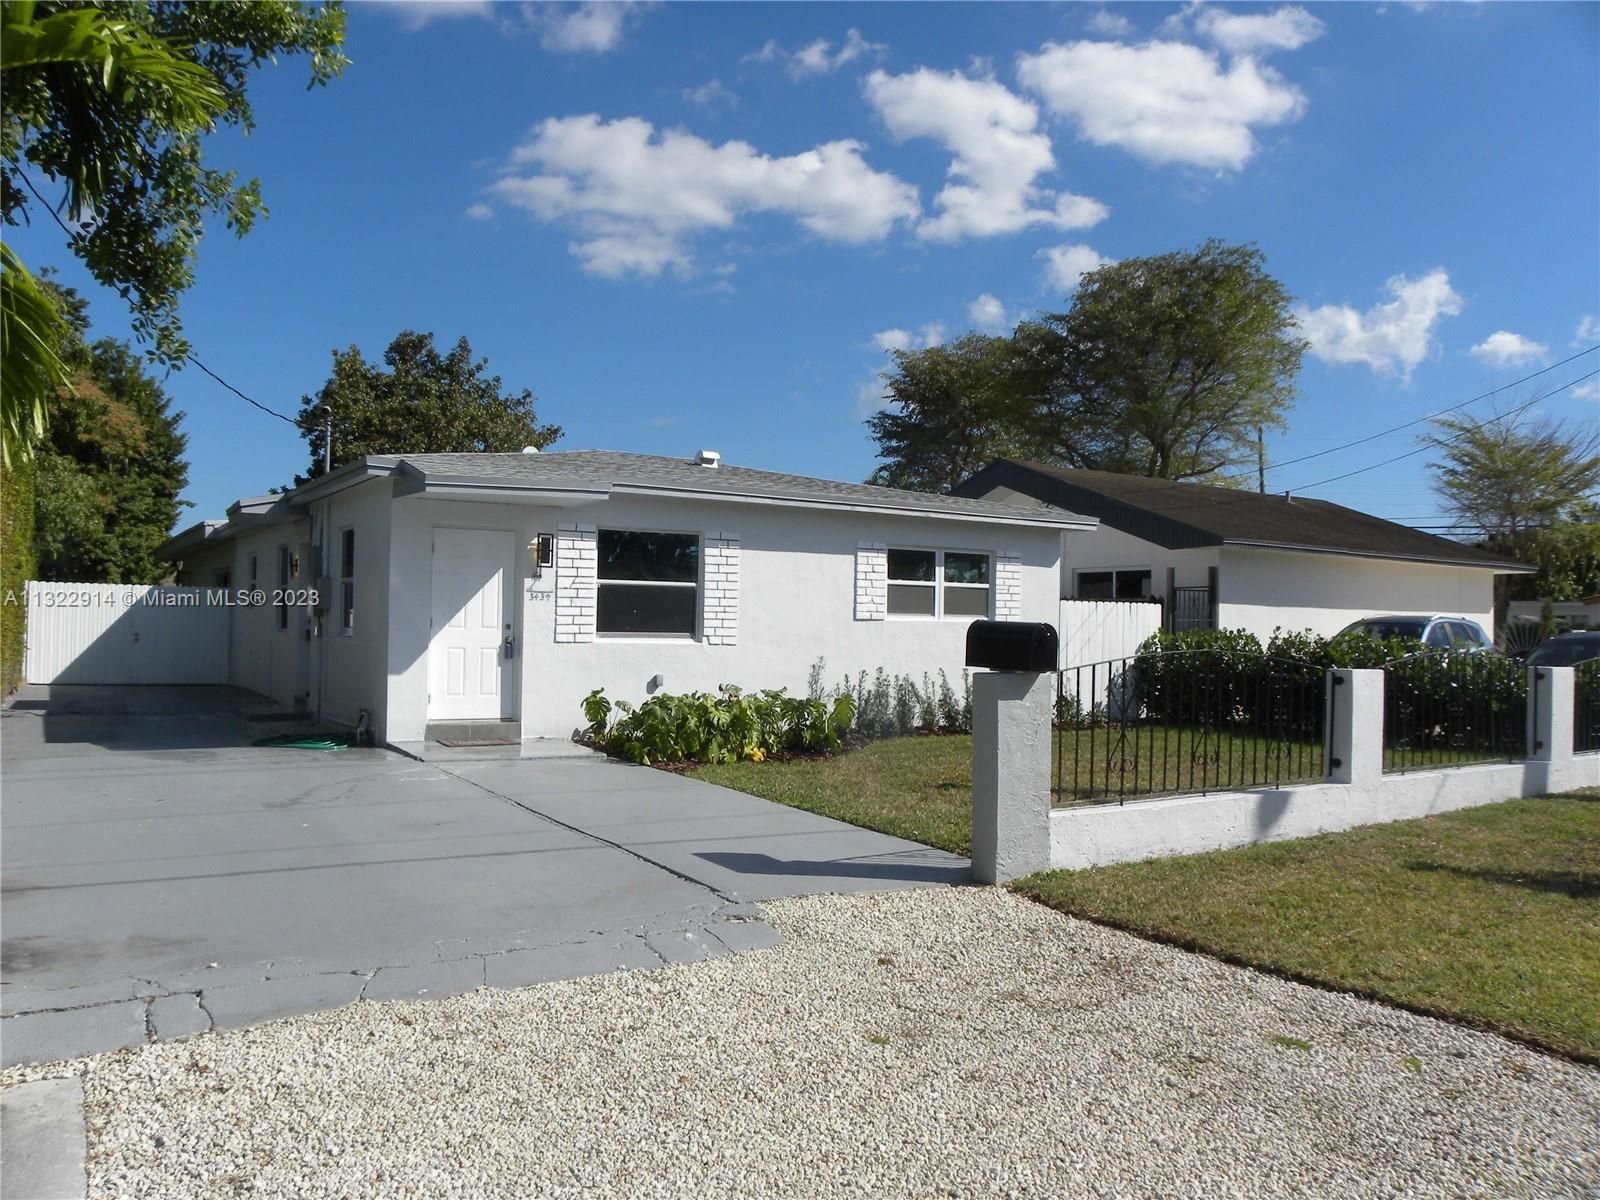 Real estate property located at 3439 65th Ave, Miami-Dade County, Miami, FL